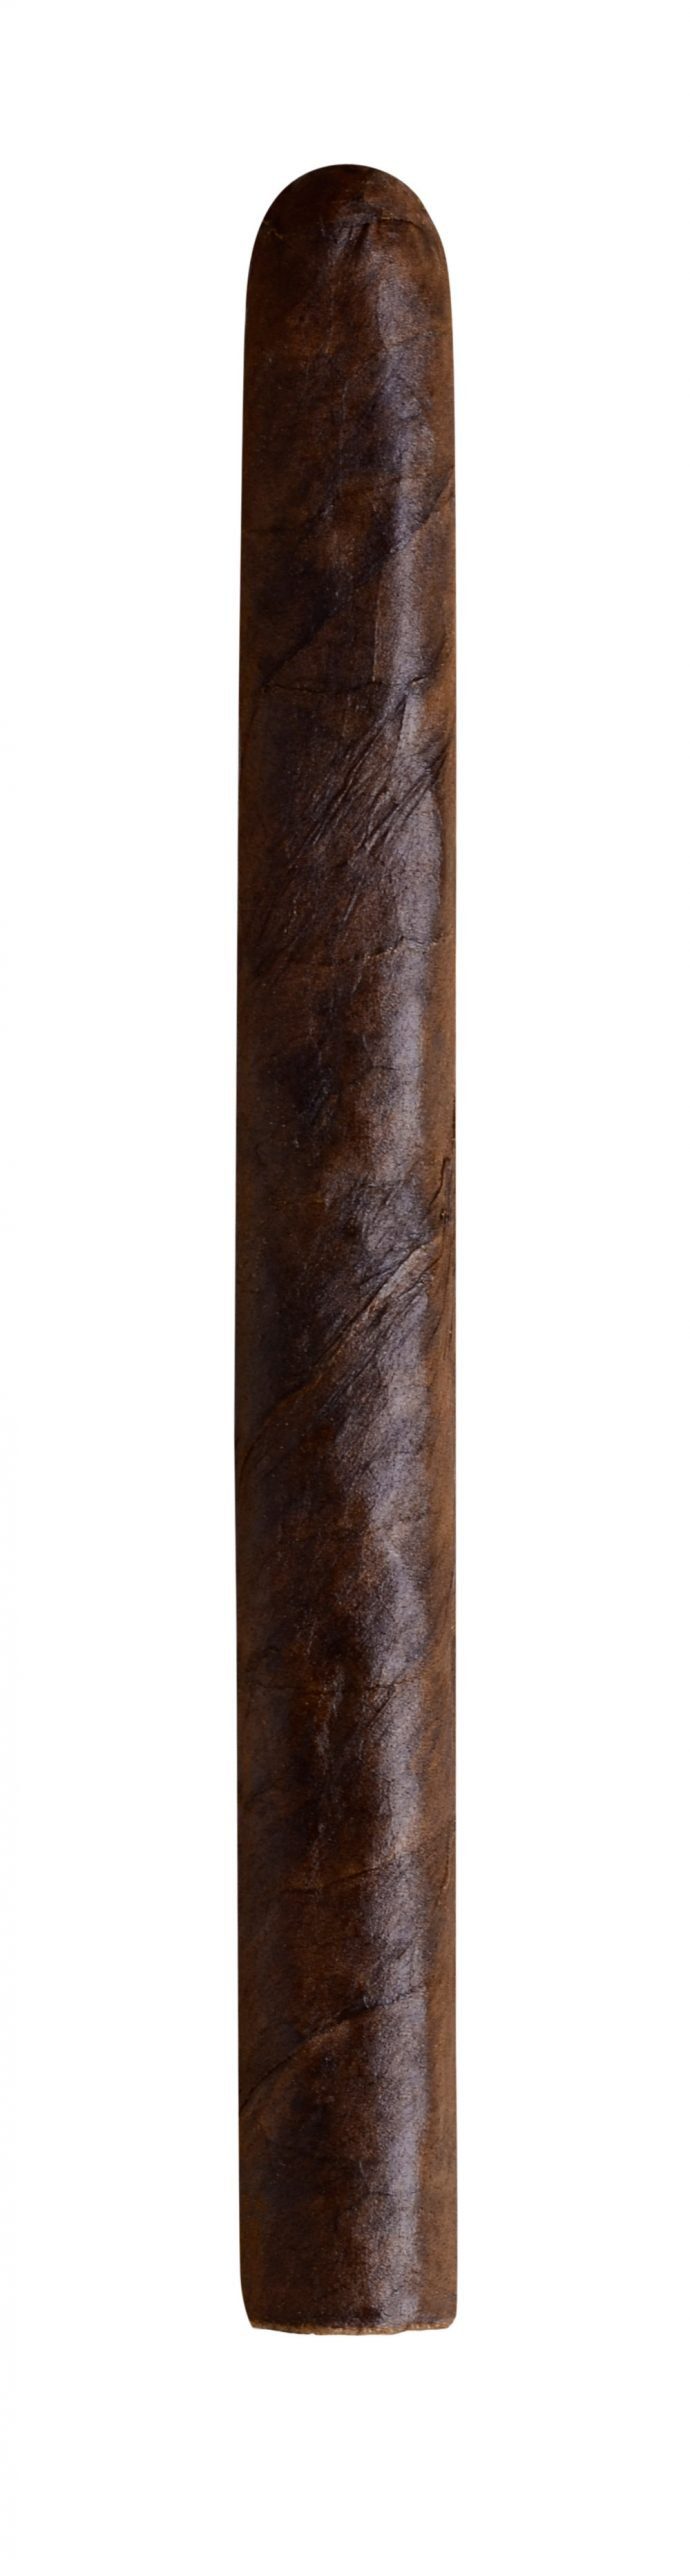 decision 350 single cigar